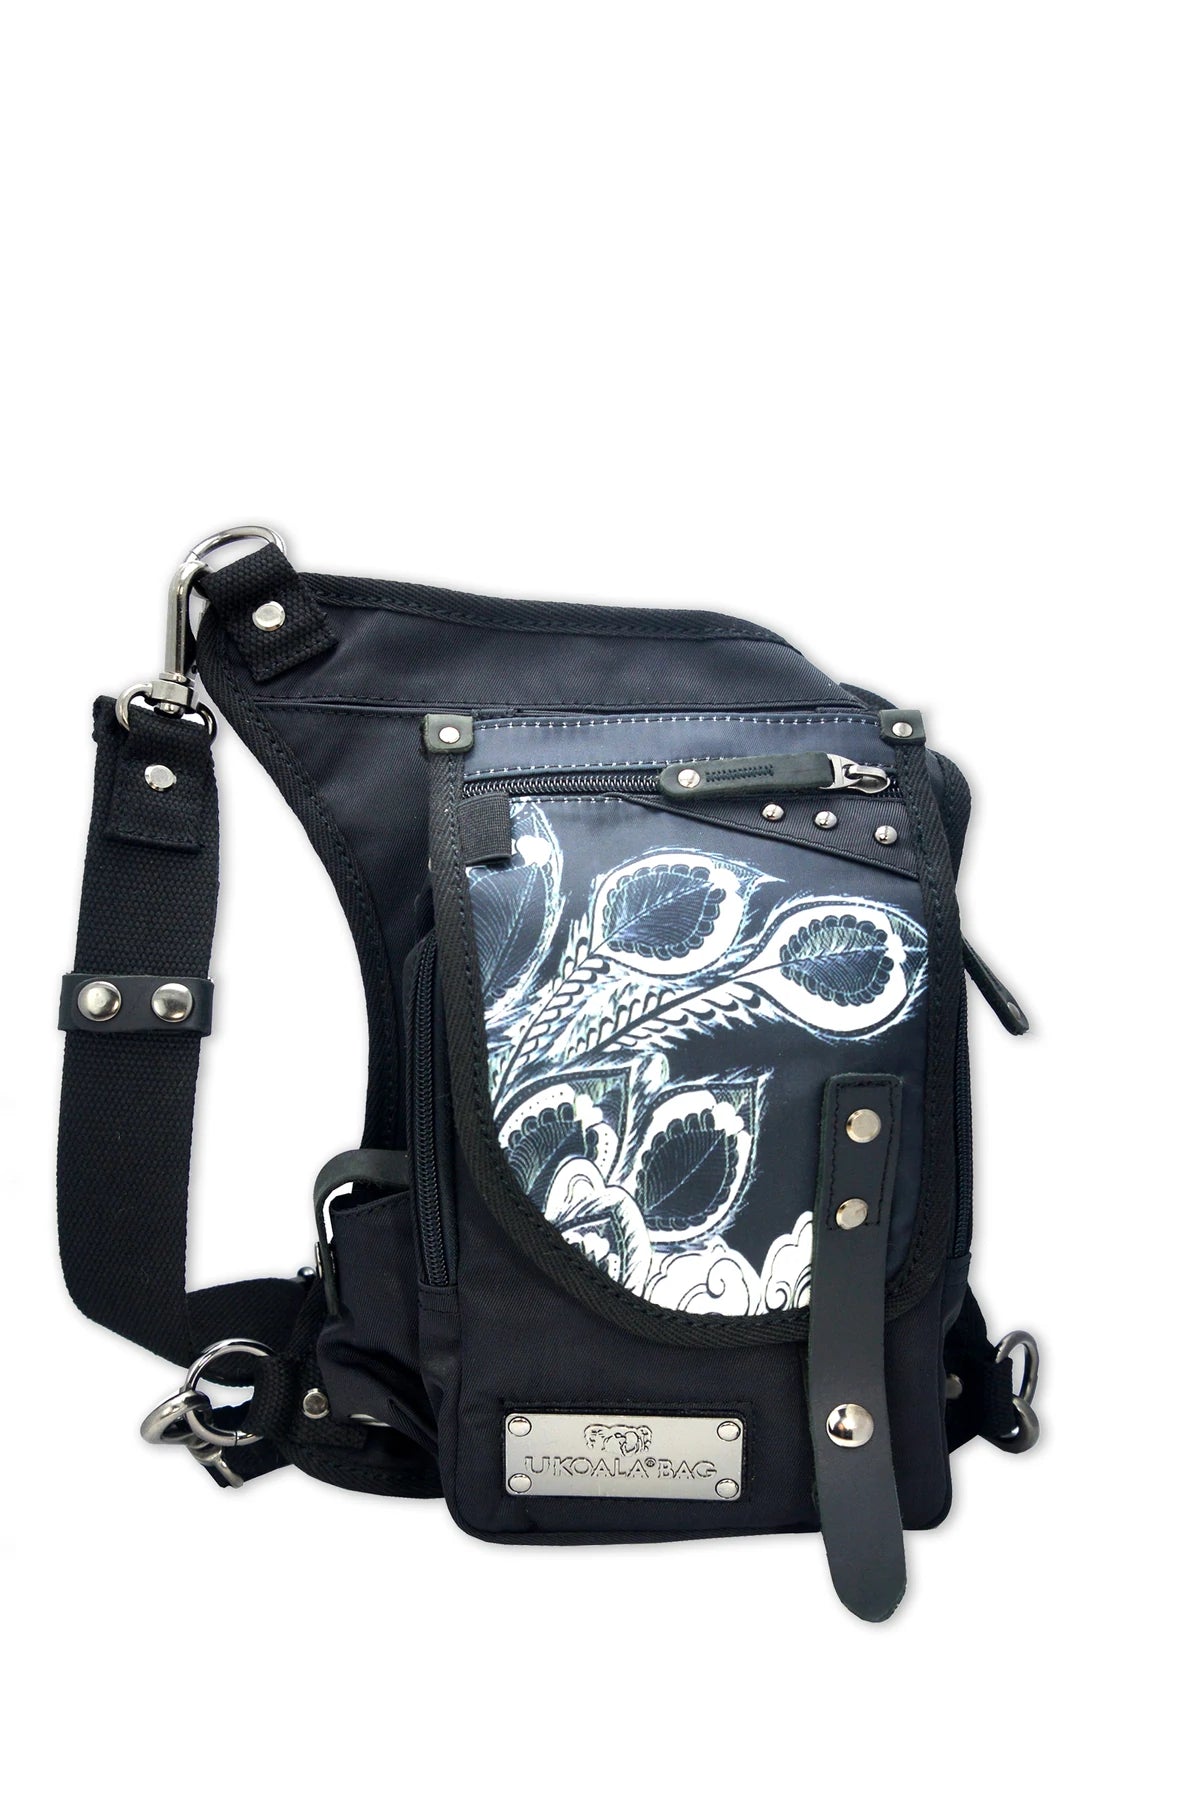 NEW Zombie UUB Gear Hip bag, Crossbody. Backpack - Hiding Hilda, LLC